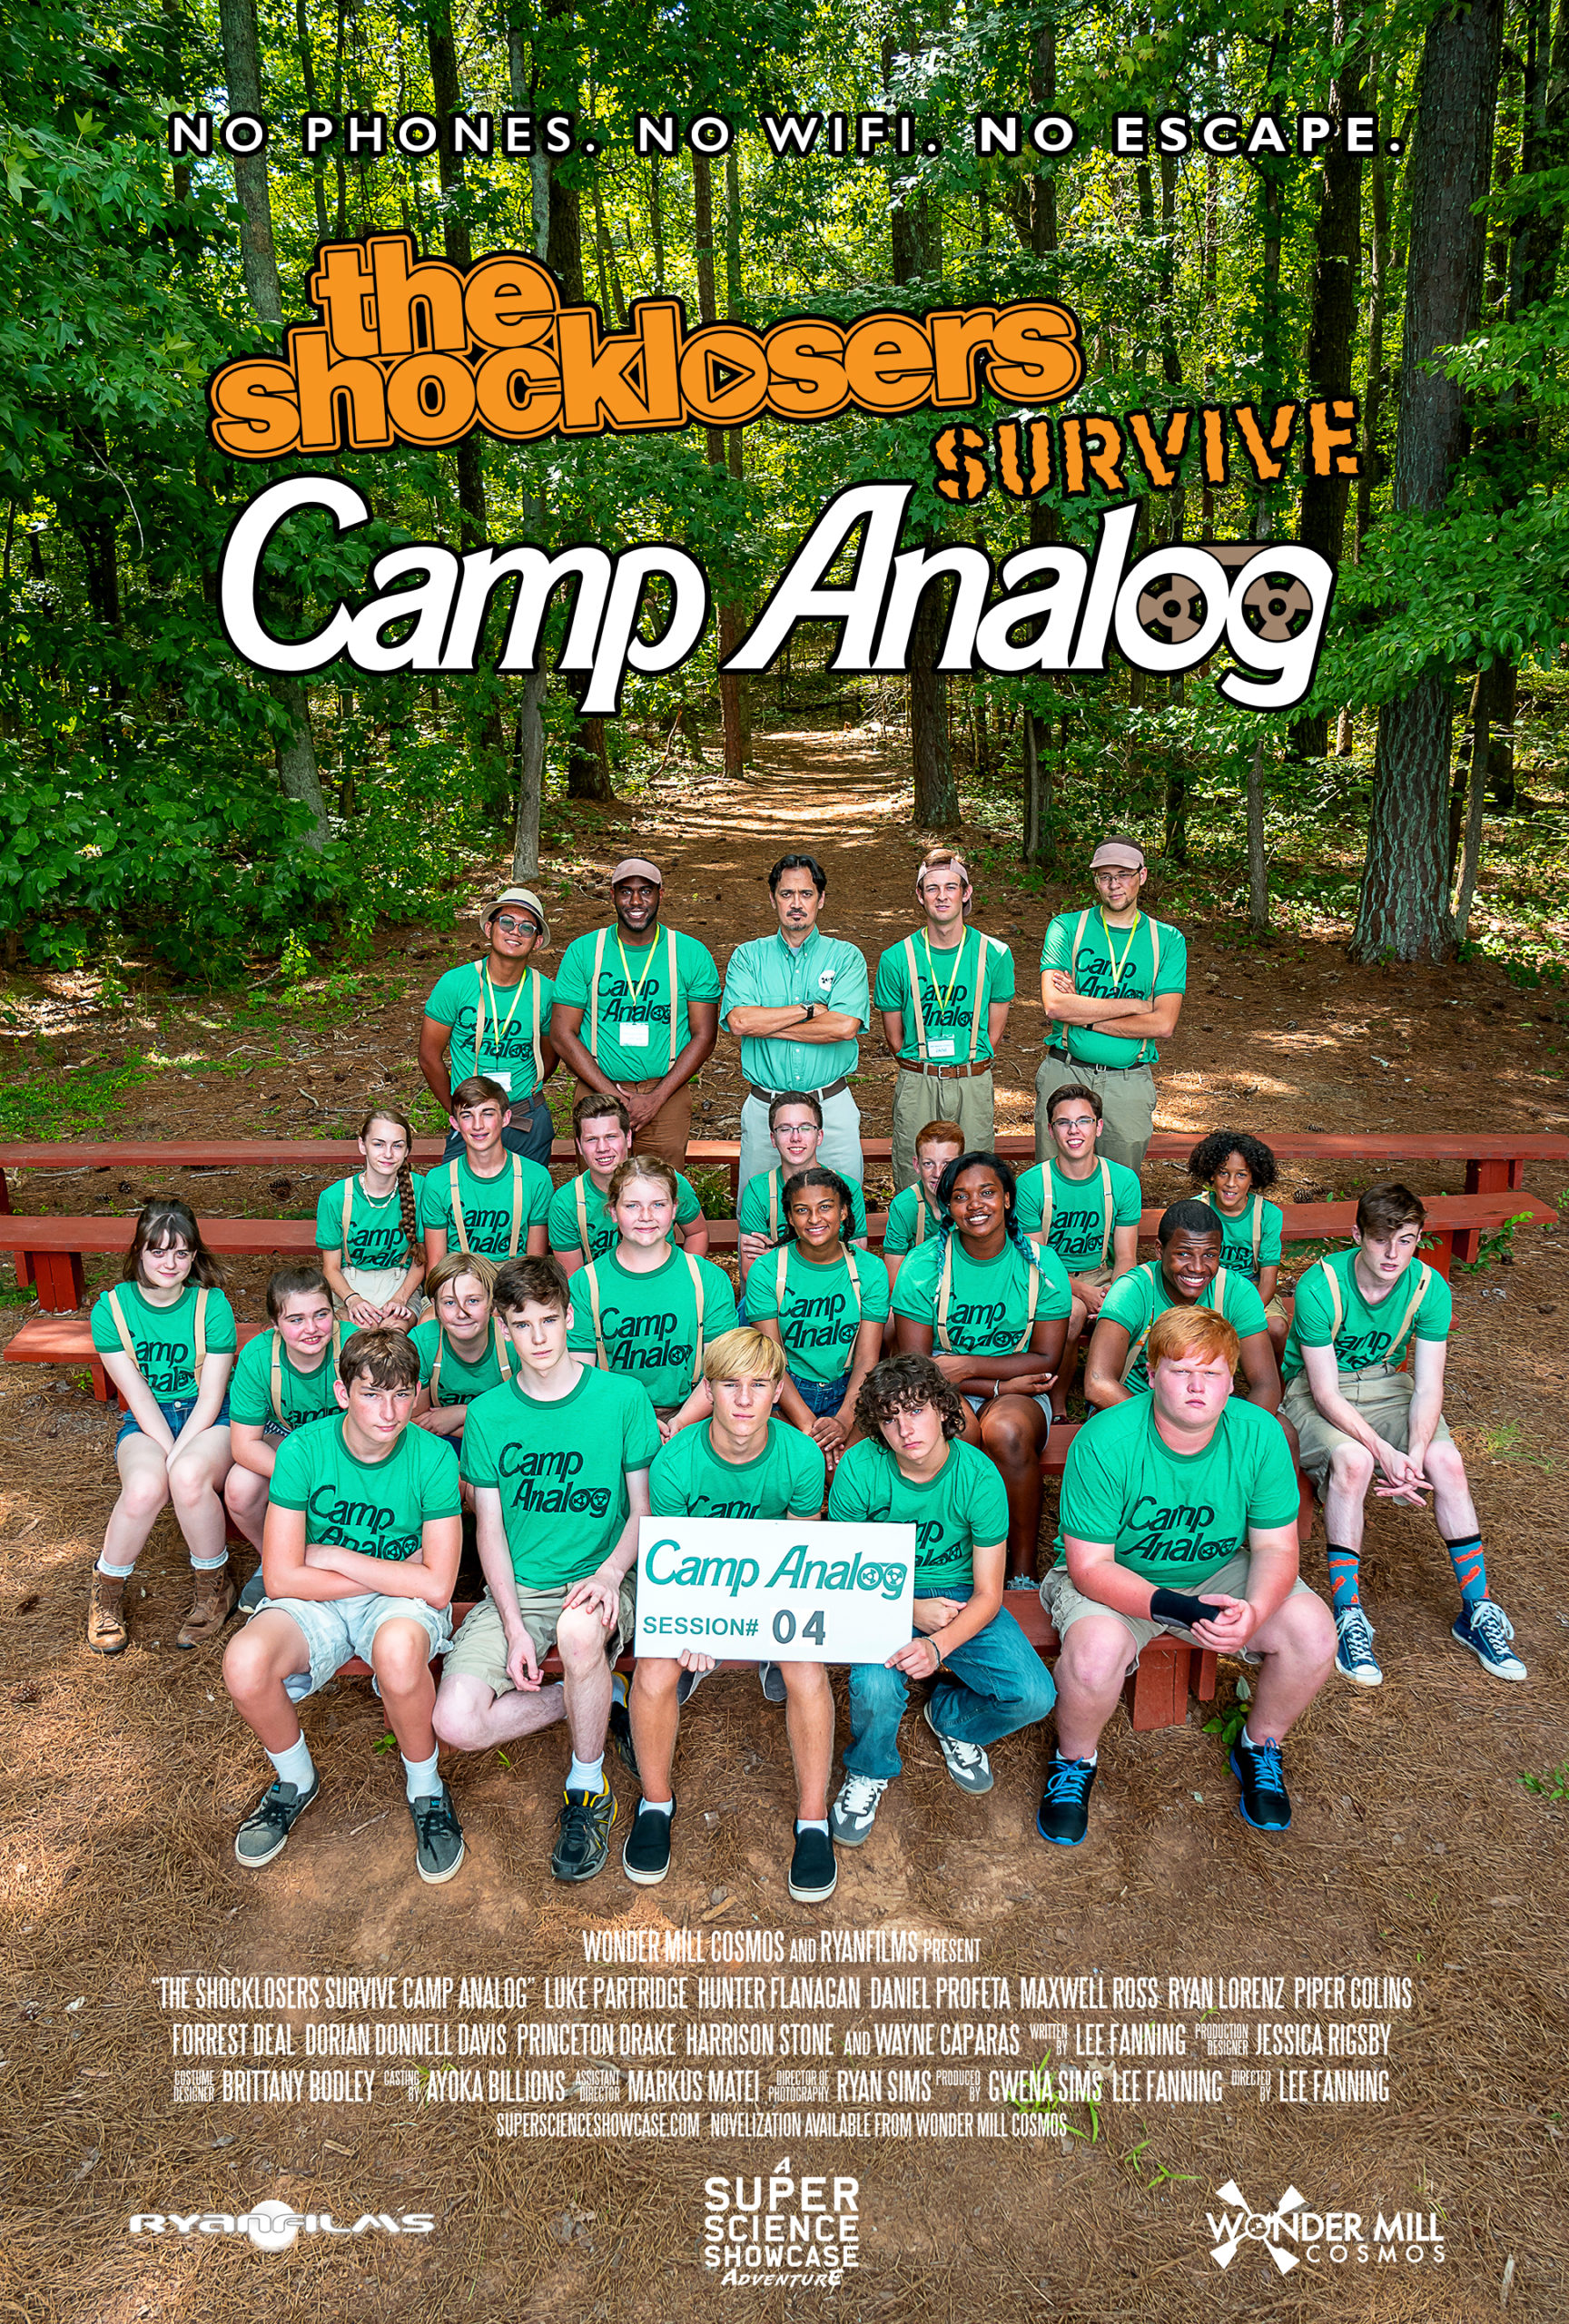 "Shocklosers Survive Camp Analog"